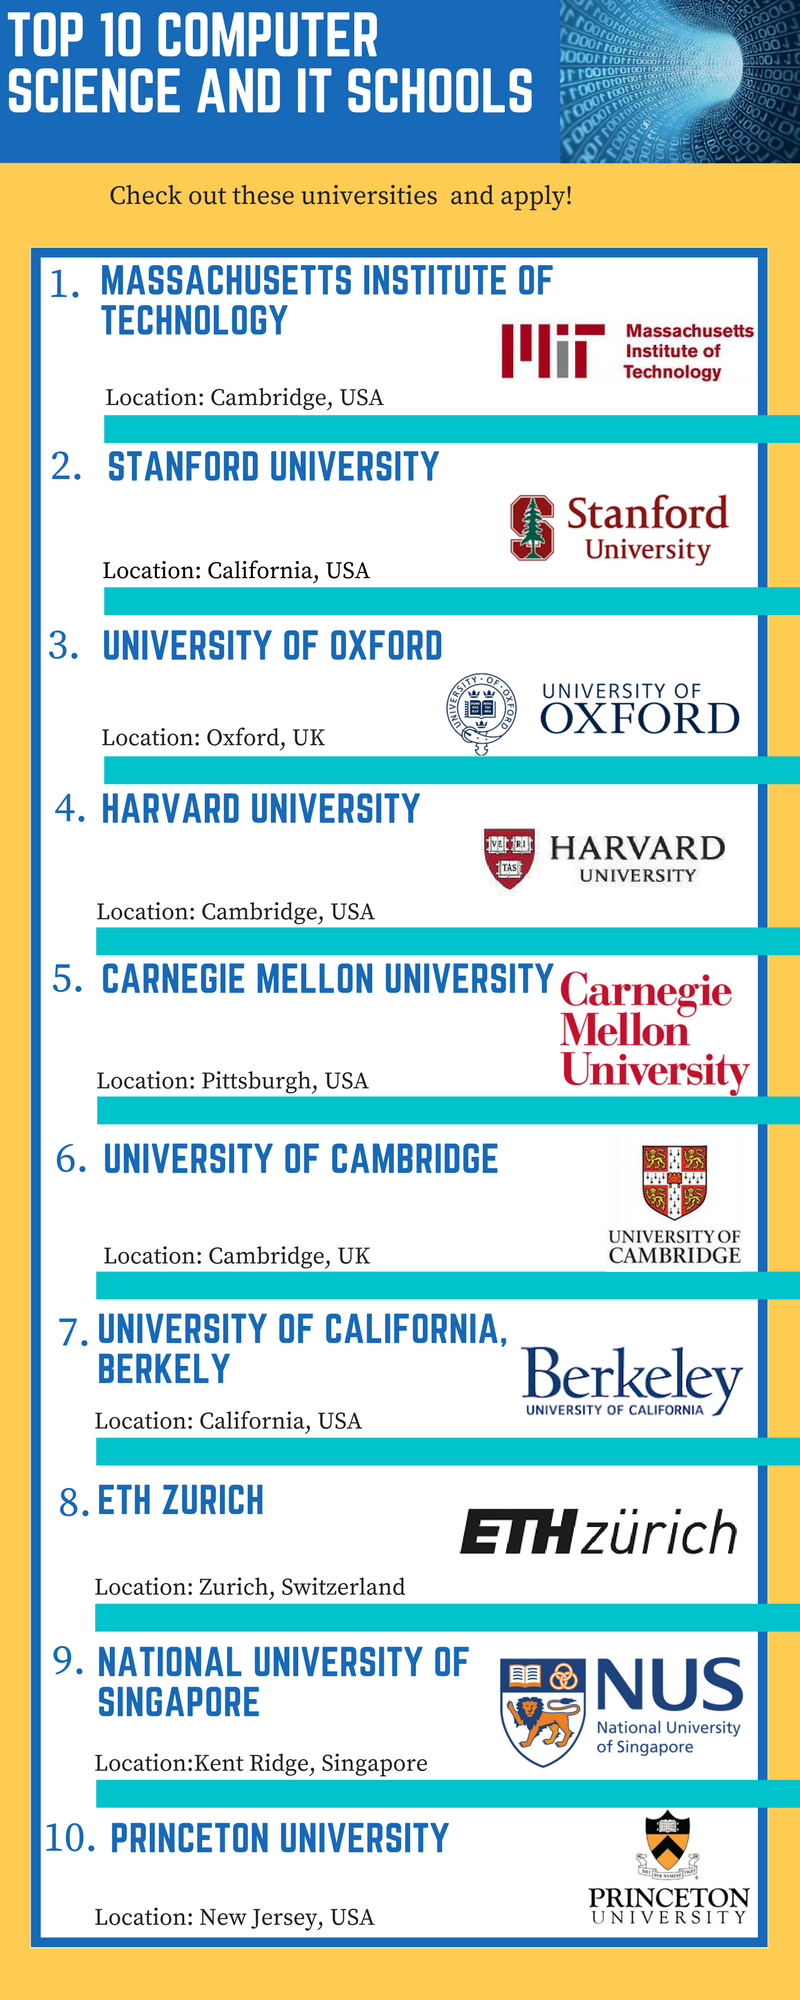 Top 10 Computer Science and IT universities